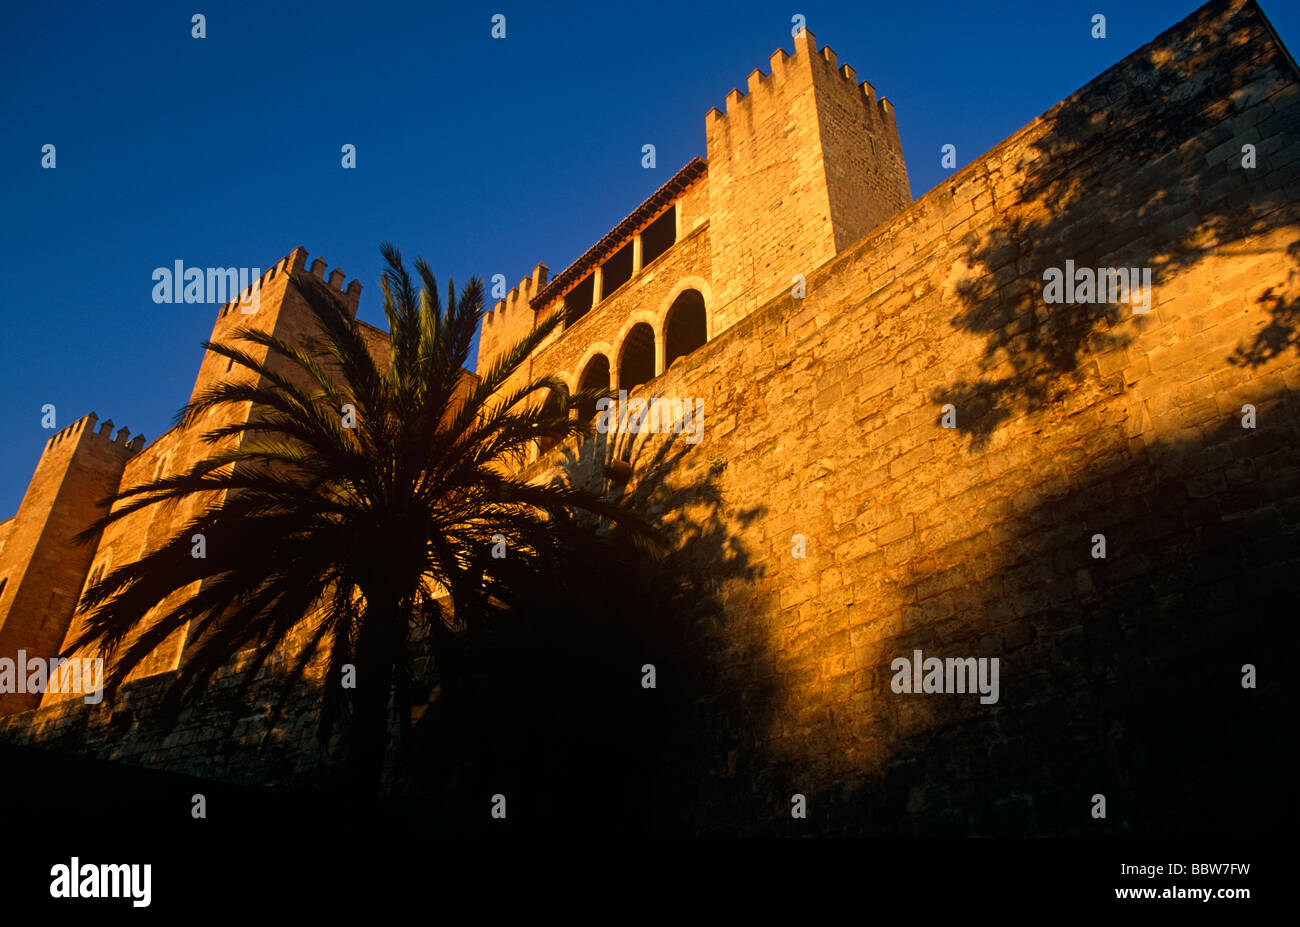 Set below palm trees, a low angle view of Palma's Museum del Palau de la Almudaina (Almudaina Palace) Stock Photo